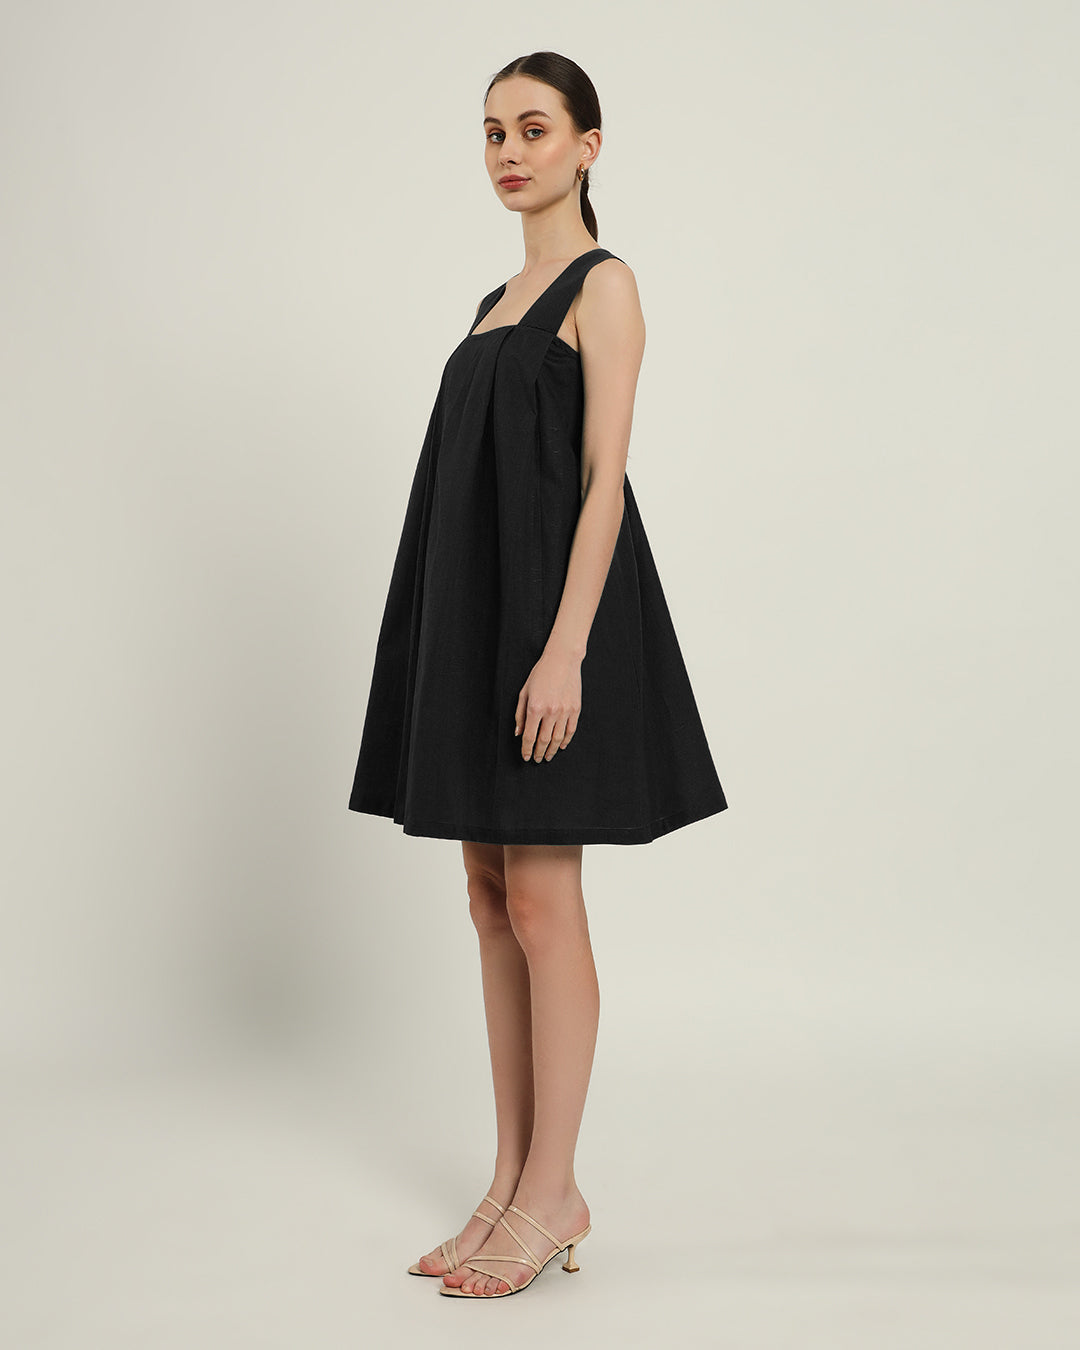 The Larissa Noir Dress